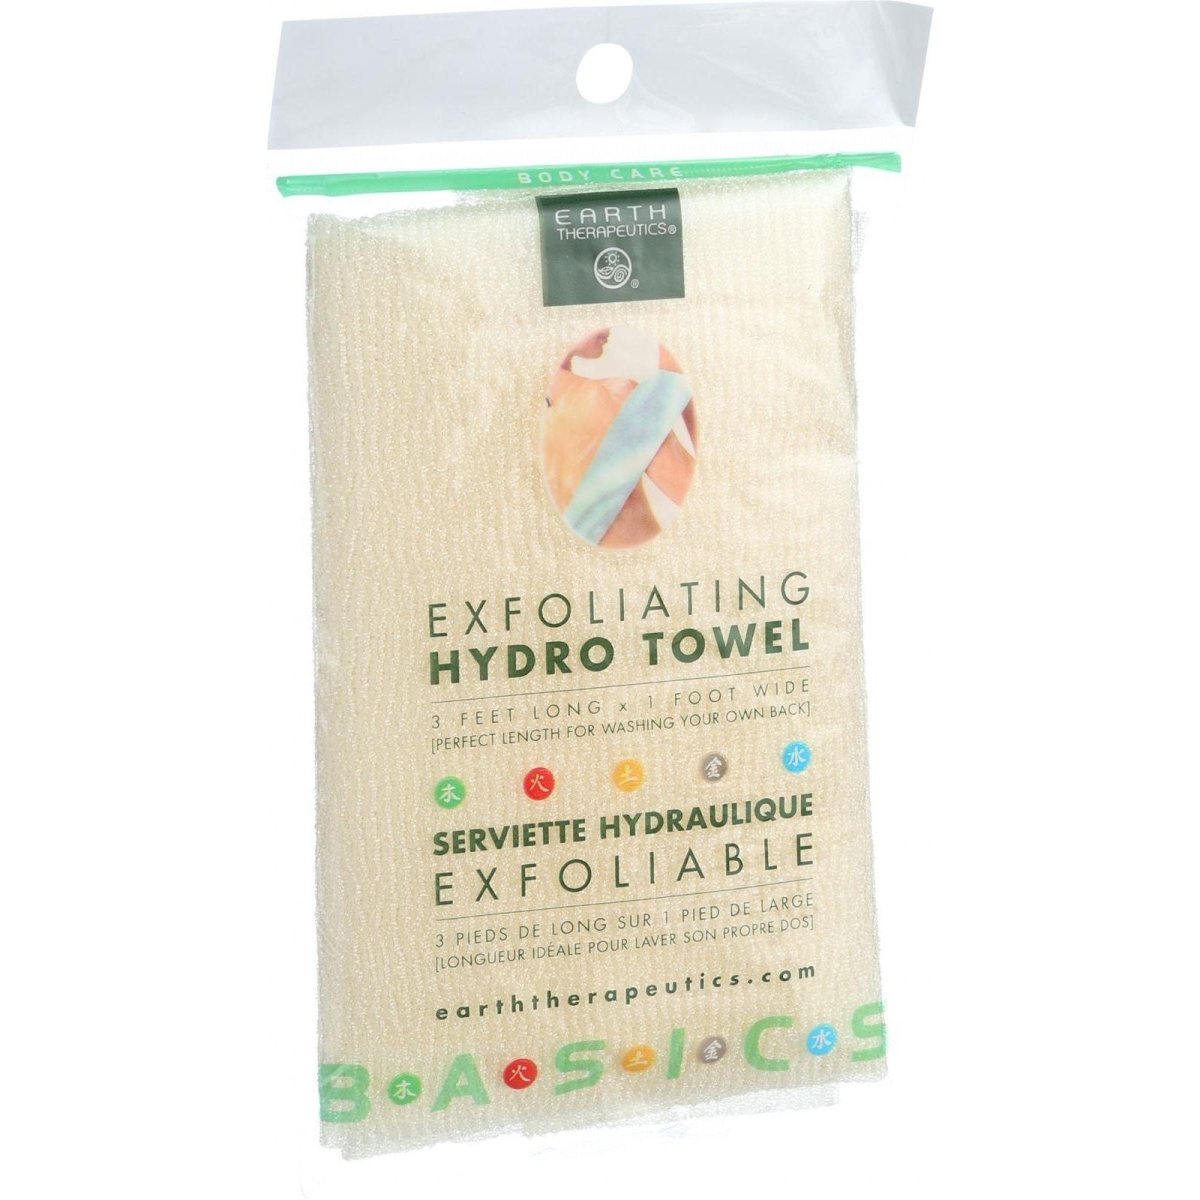 Hg0755165 Hydro Towel Exfoliating